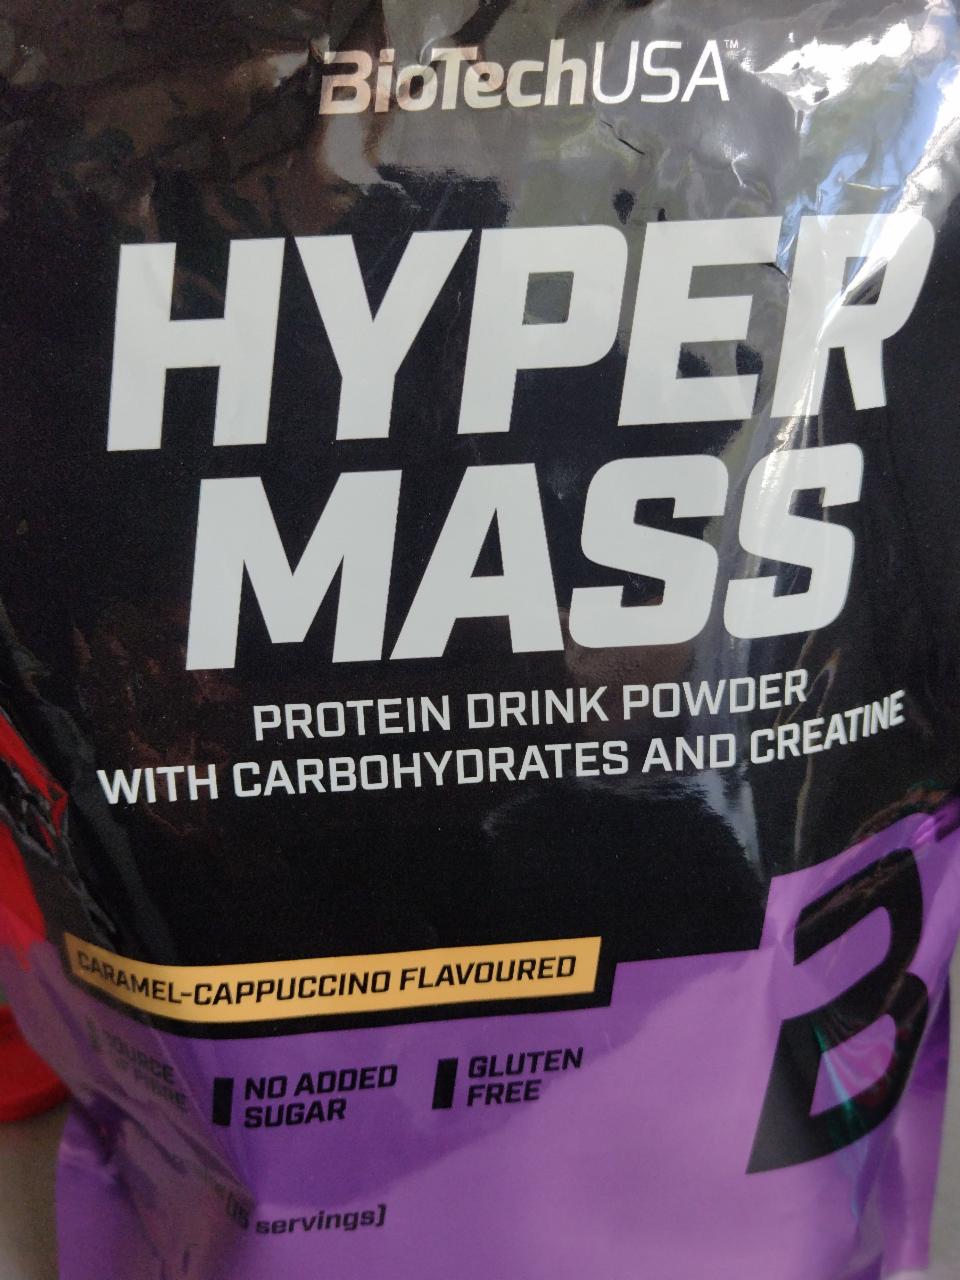 Fotografie - Hyper MASS Protein Drink Powder Caramel-Cappuccino BioTechUSA